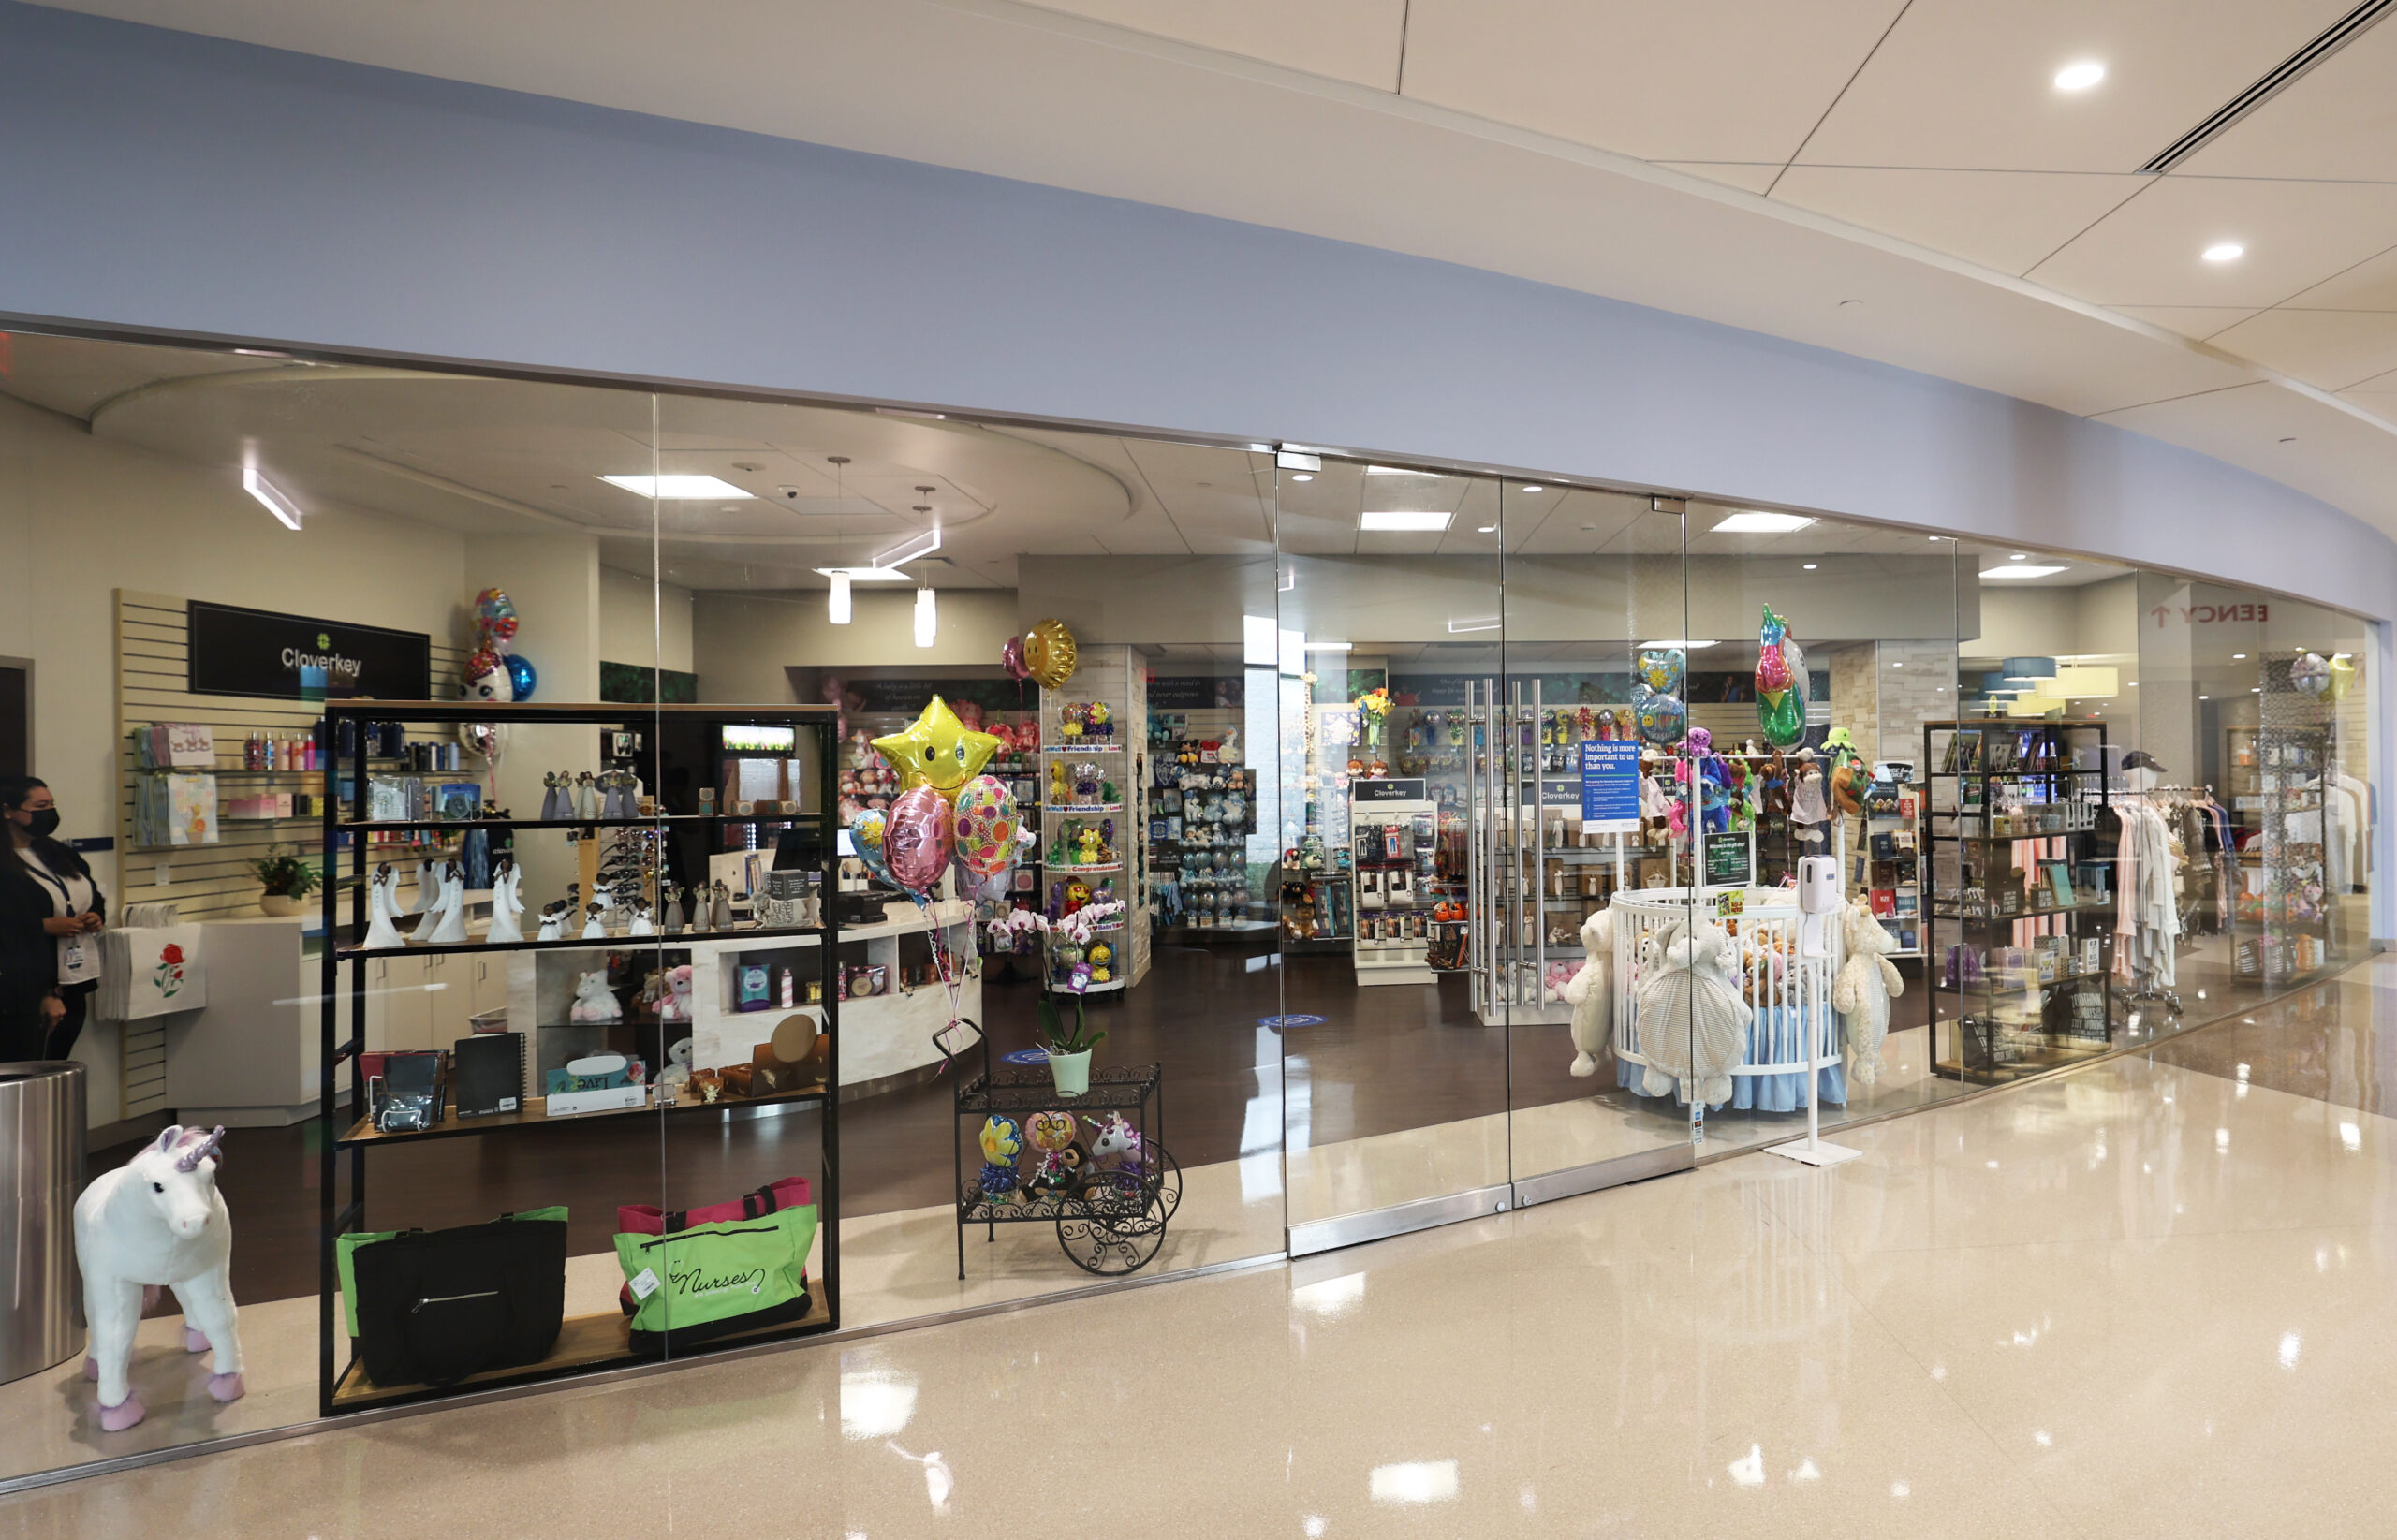 Cloverkey Gift Shop at Texas Health Huguley Hospital